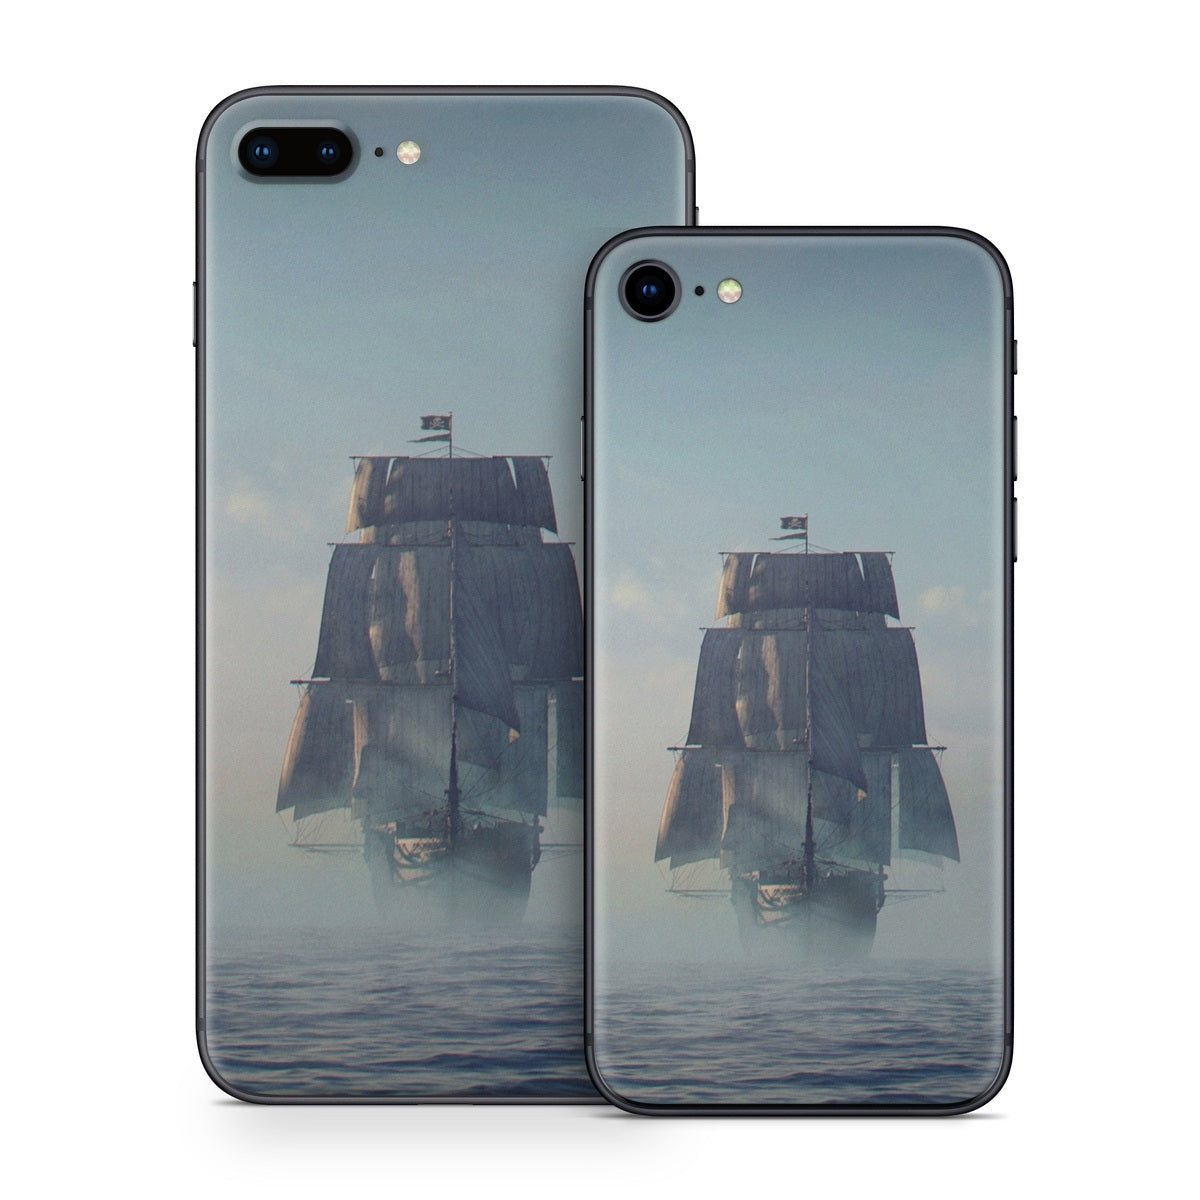 Black Sails - Apple iPhone 8 Skin